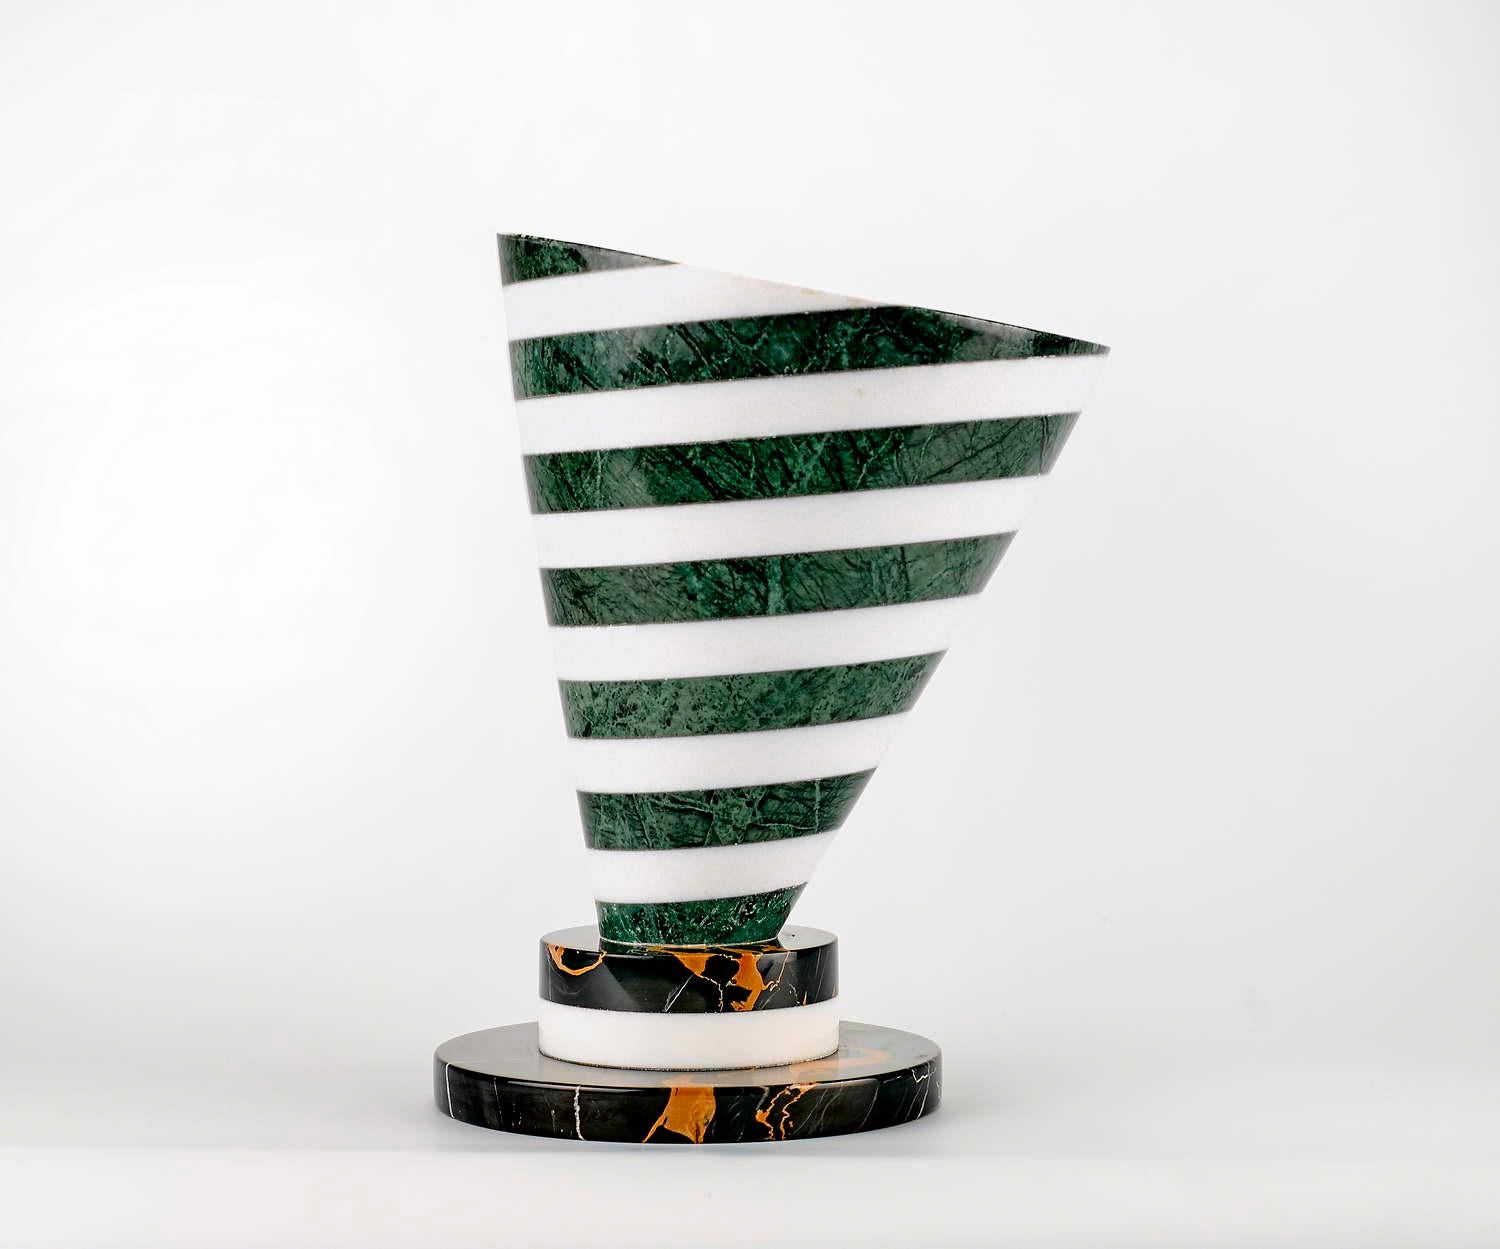 Marble vase designed by Martine Bedin

Size: Diameter cm 22 x height 30
Materials: Nero Marquina - Bianco Carrara - Verde Alpi
Designer: Martine Bedin.